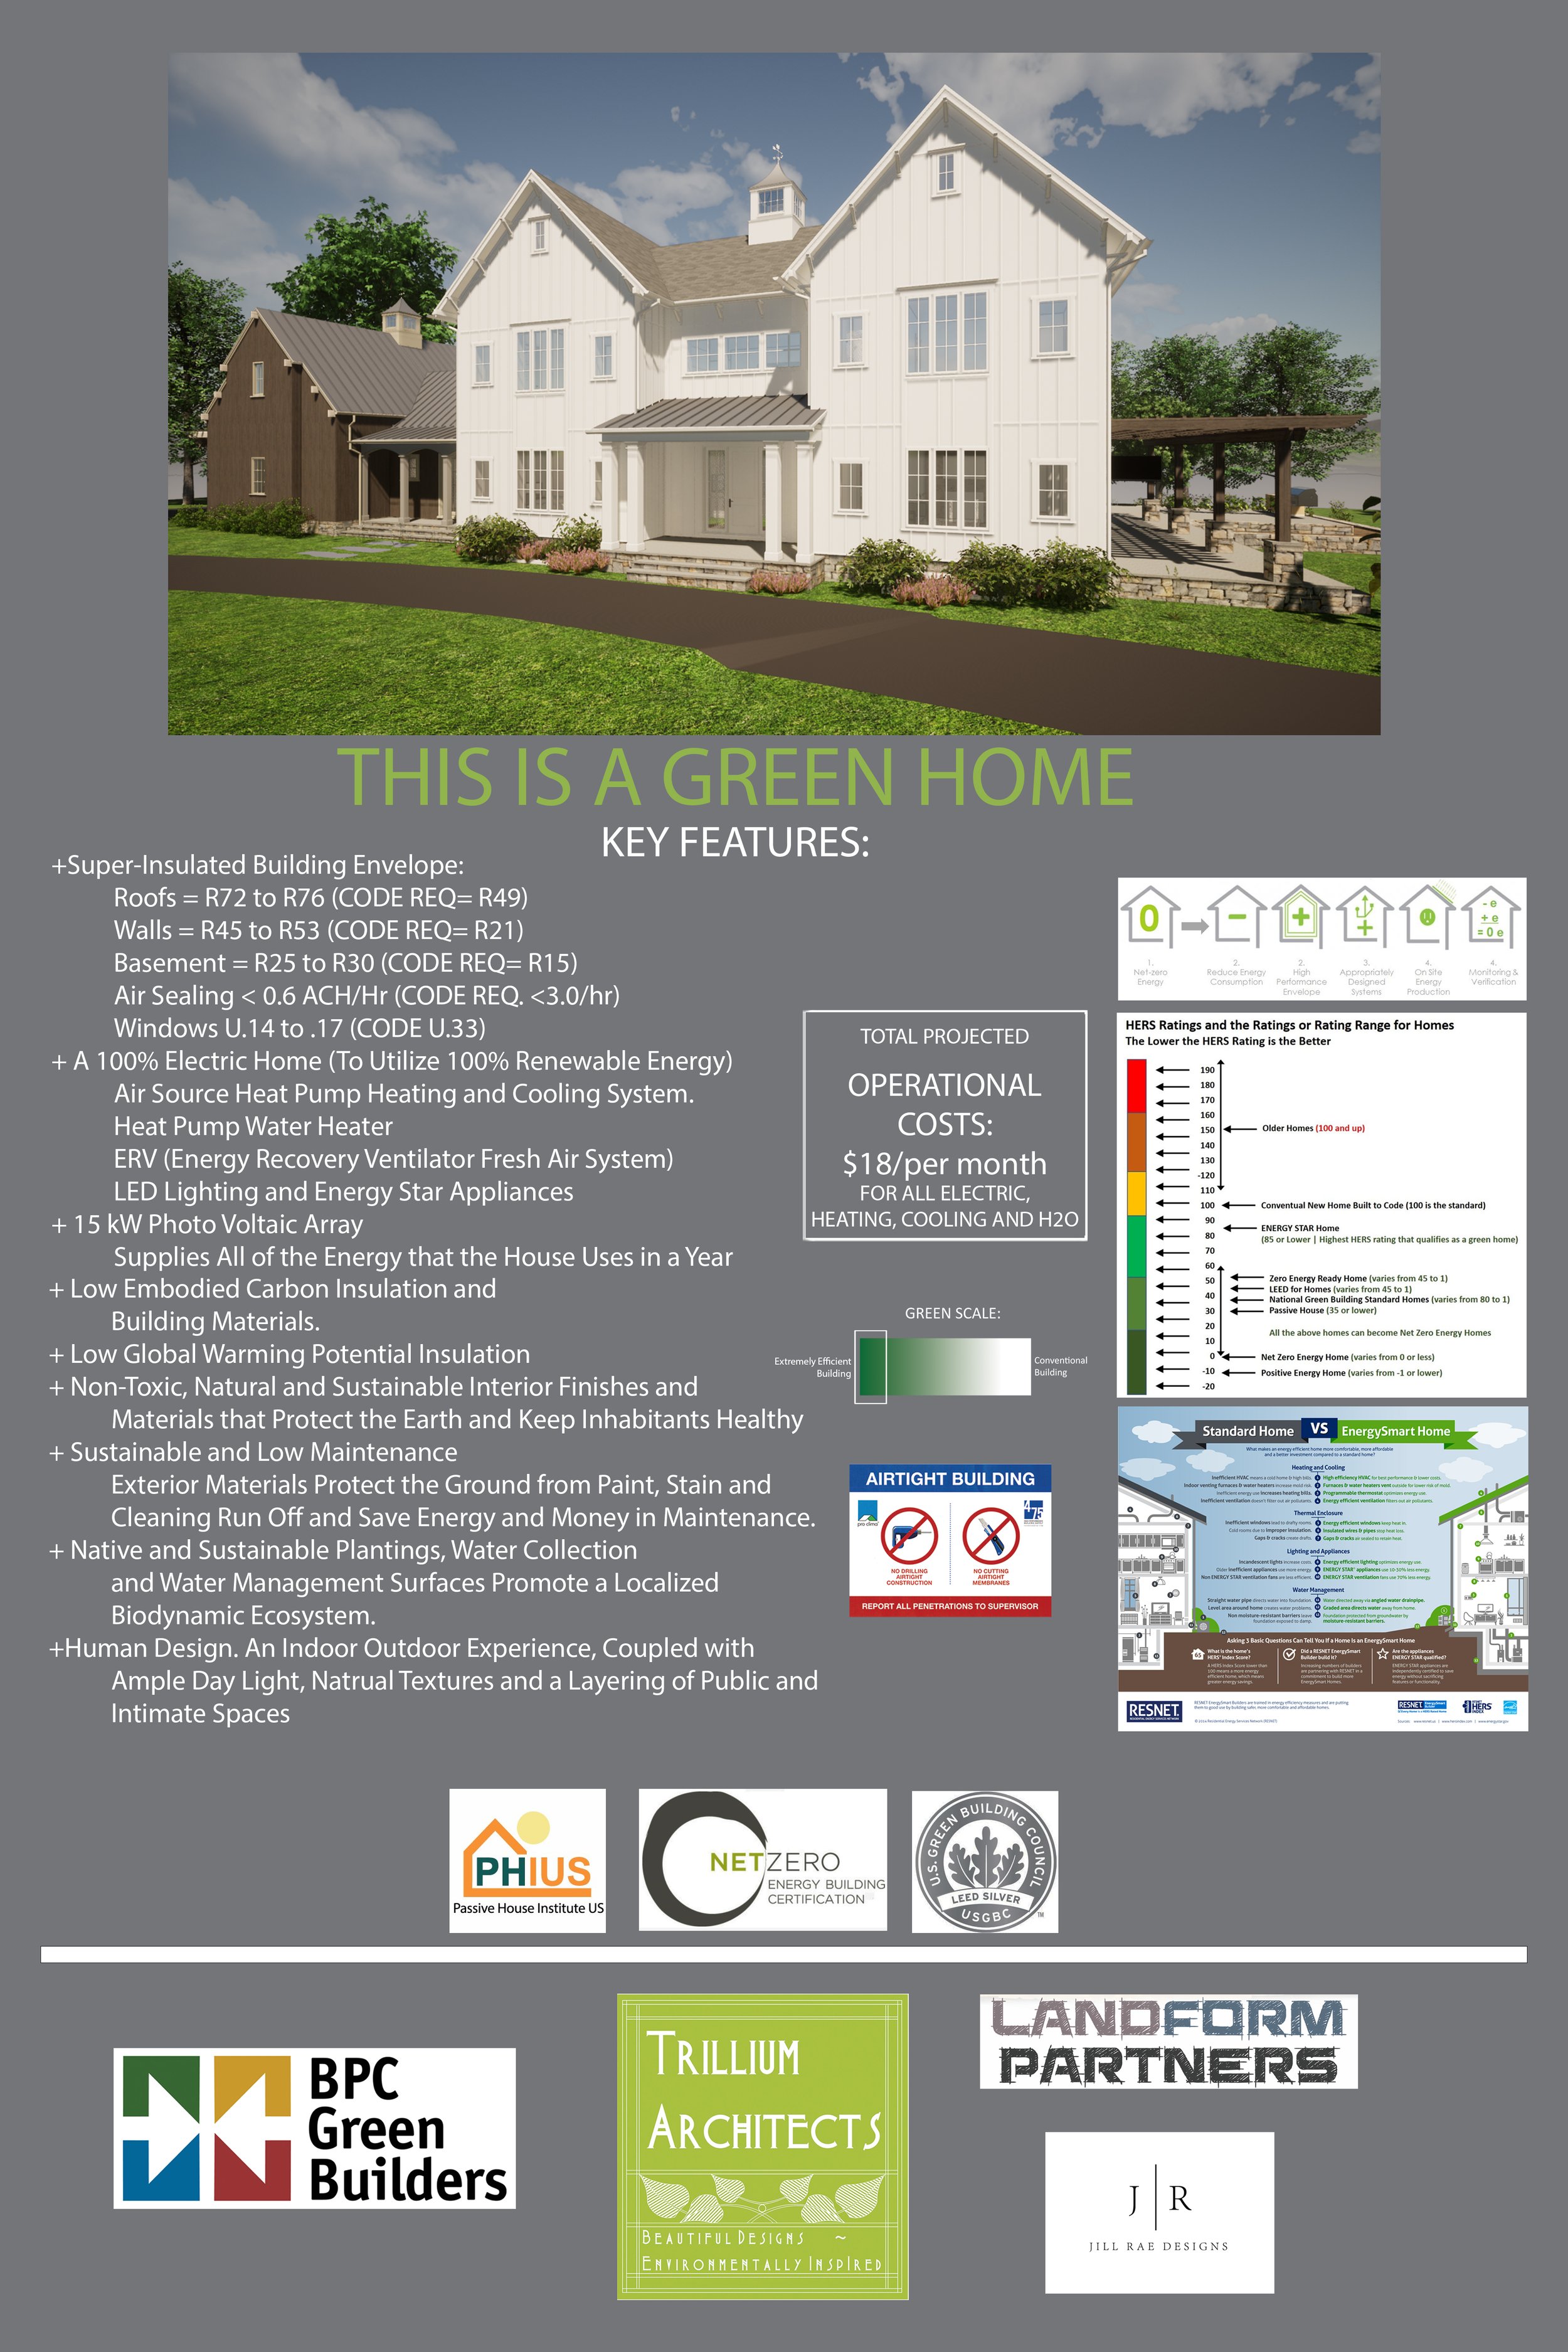  Green Homes, LEED homes, Passive House, Net Zero, Sustainable, Organic, Healthy, Green Architect 